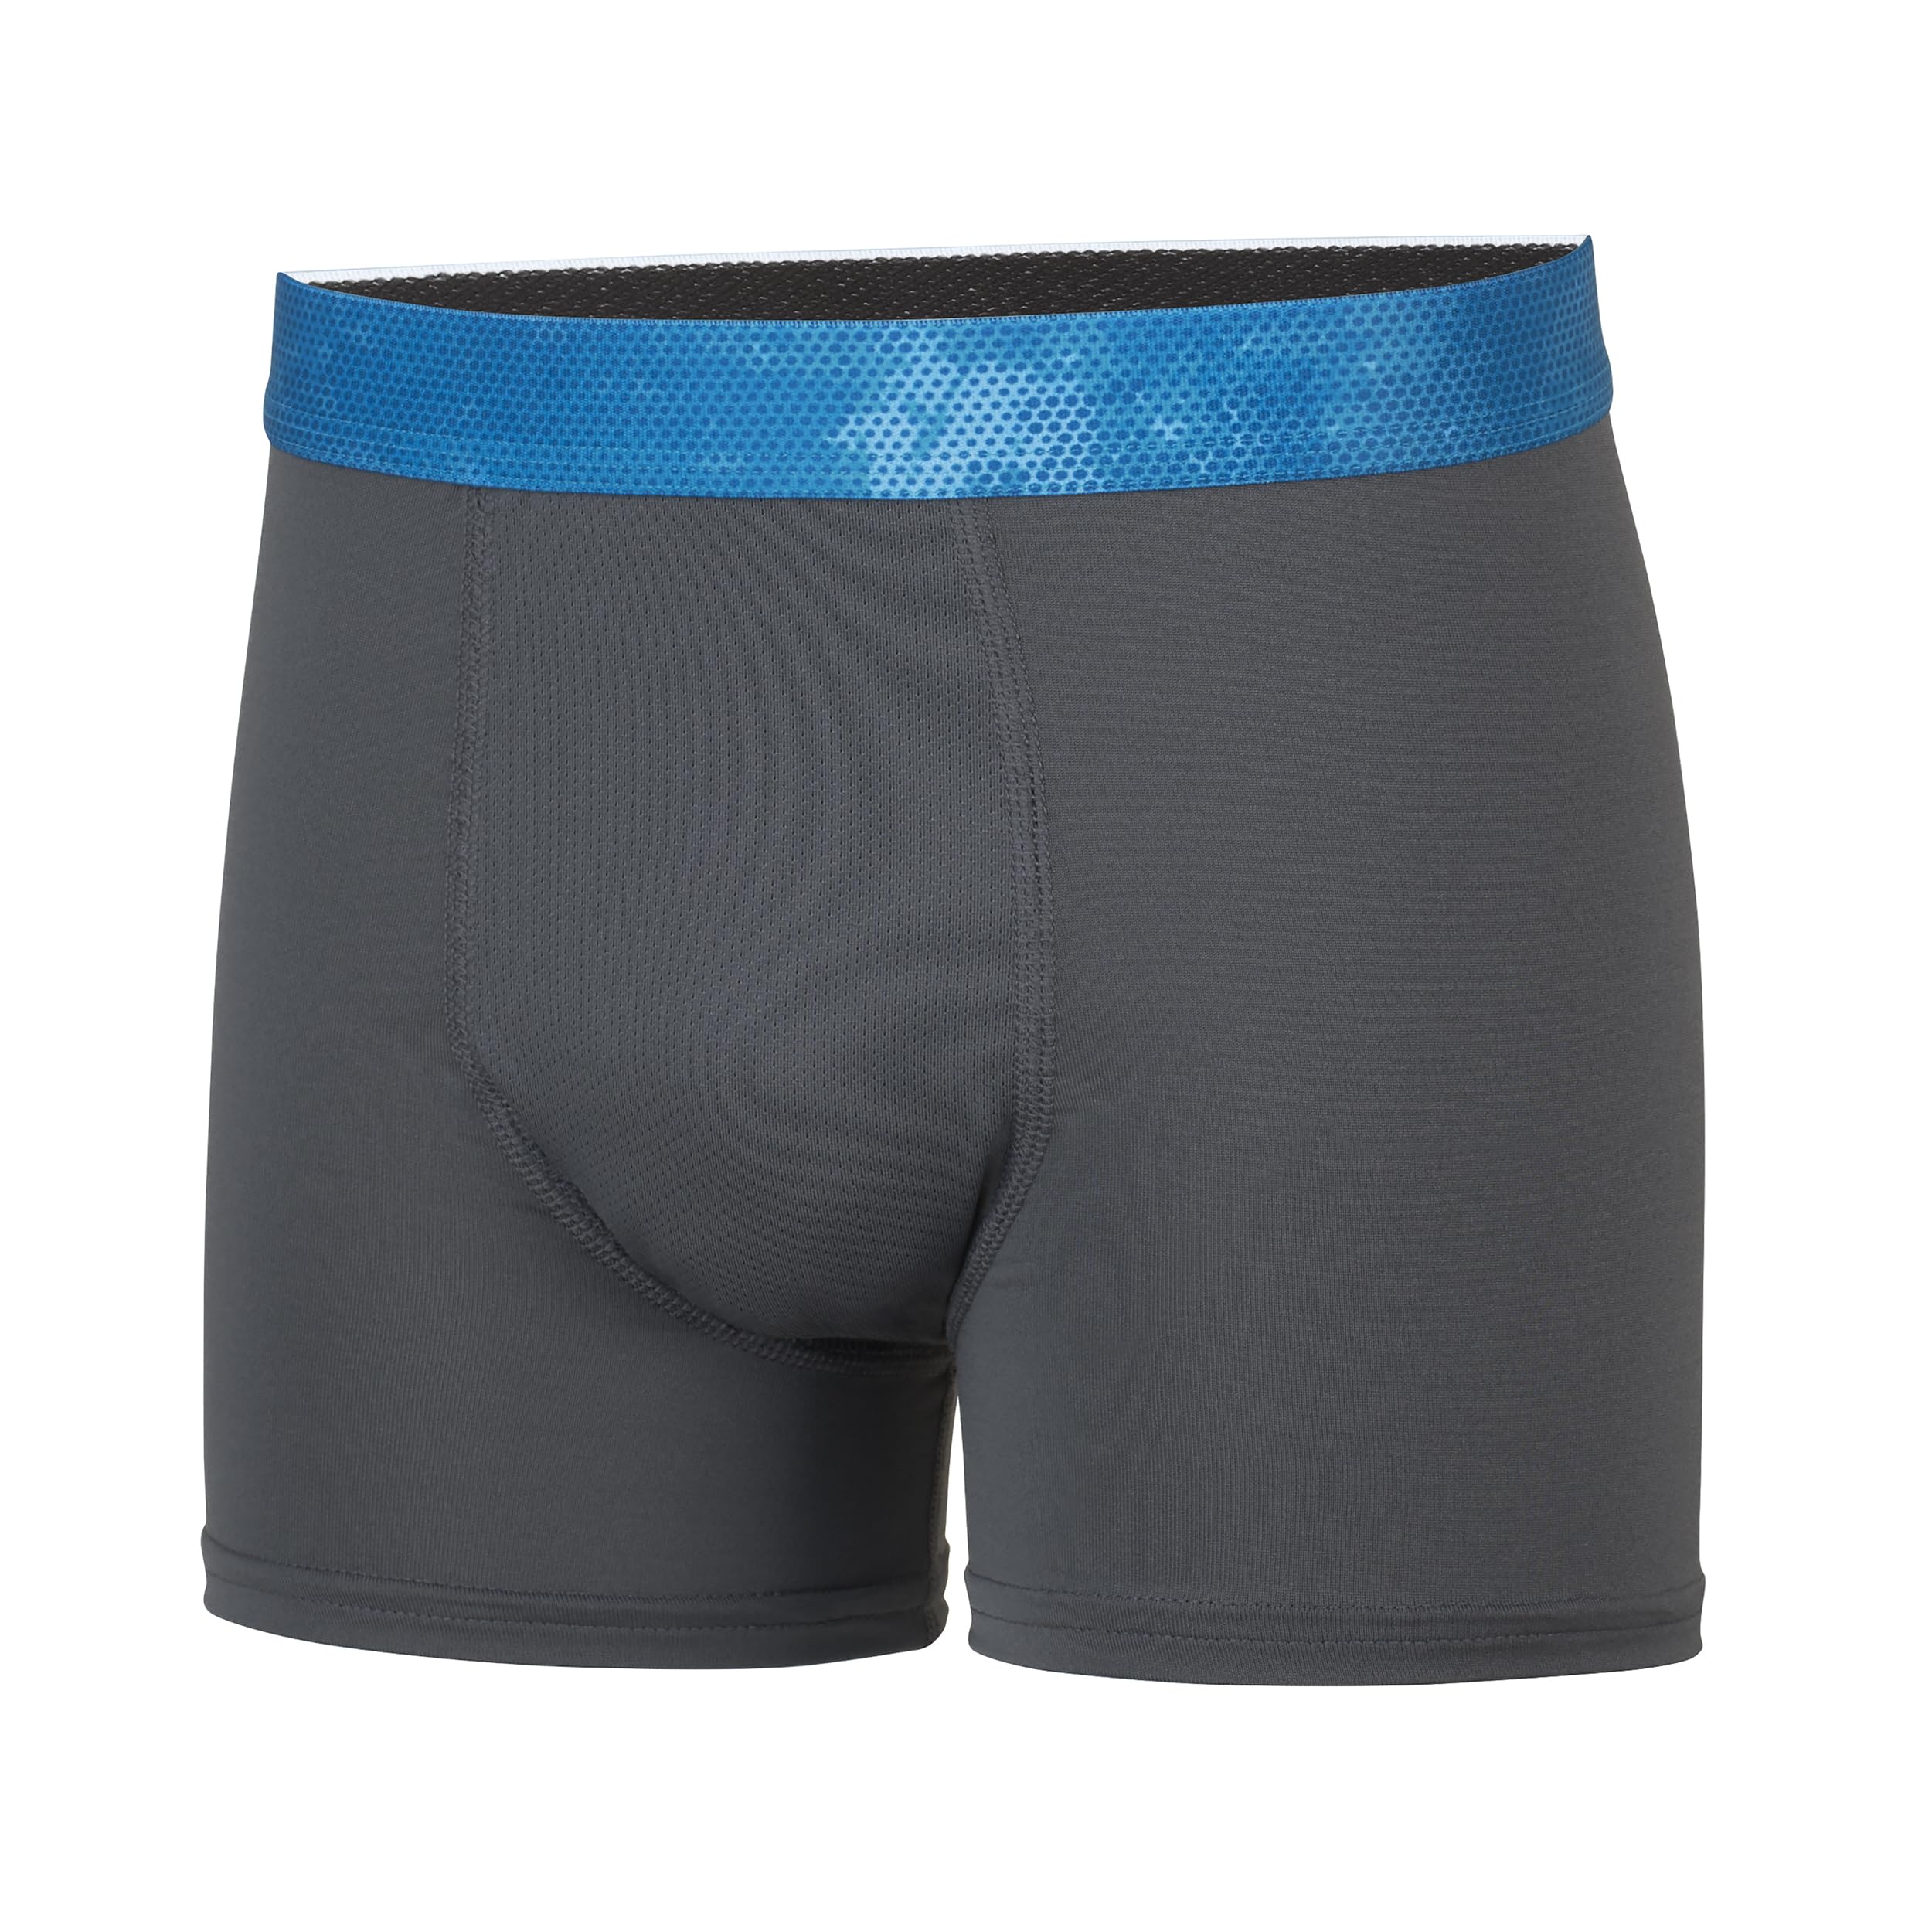 Hanes Boys' Big Performance Tween Boxer Briefs Underwear, X-Temp, Assorted Solids, 6-Pack